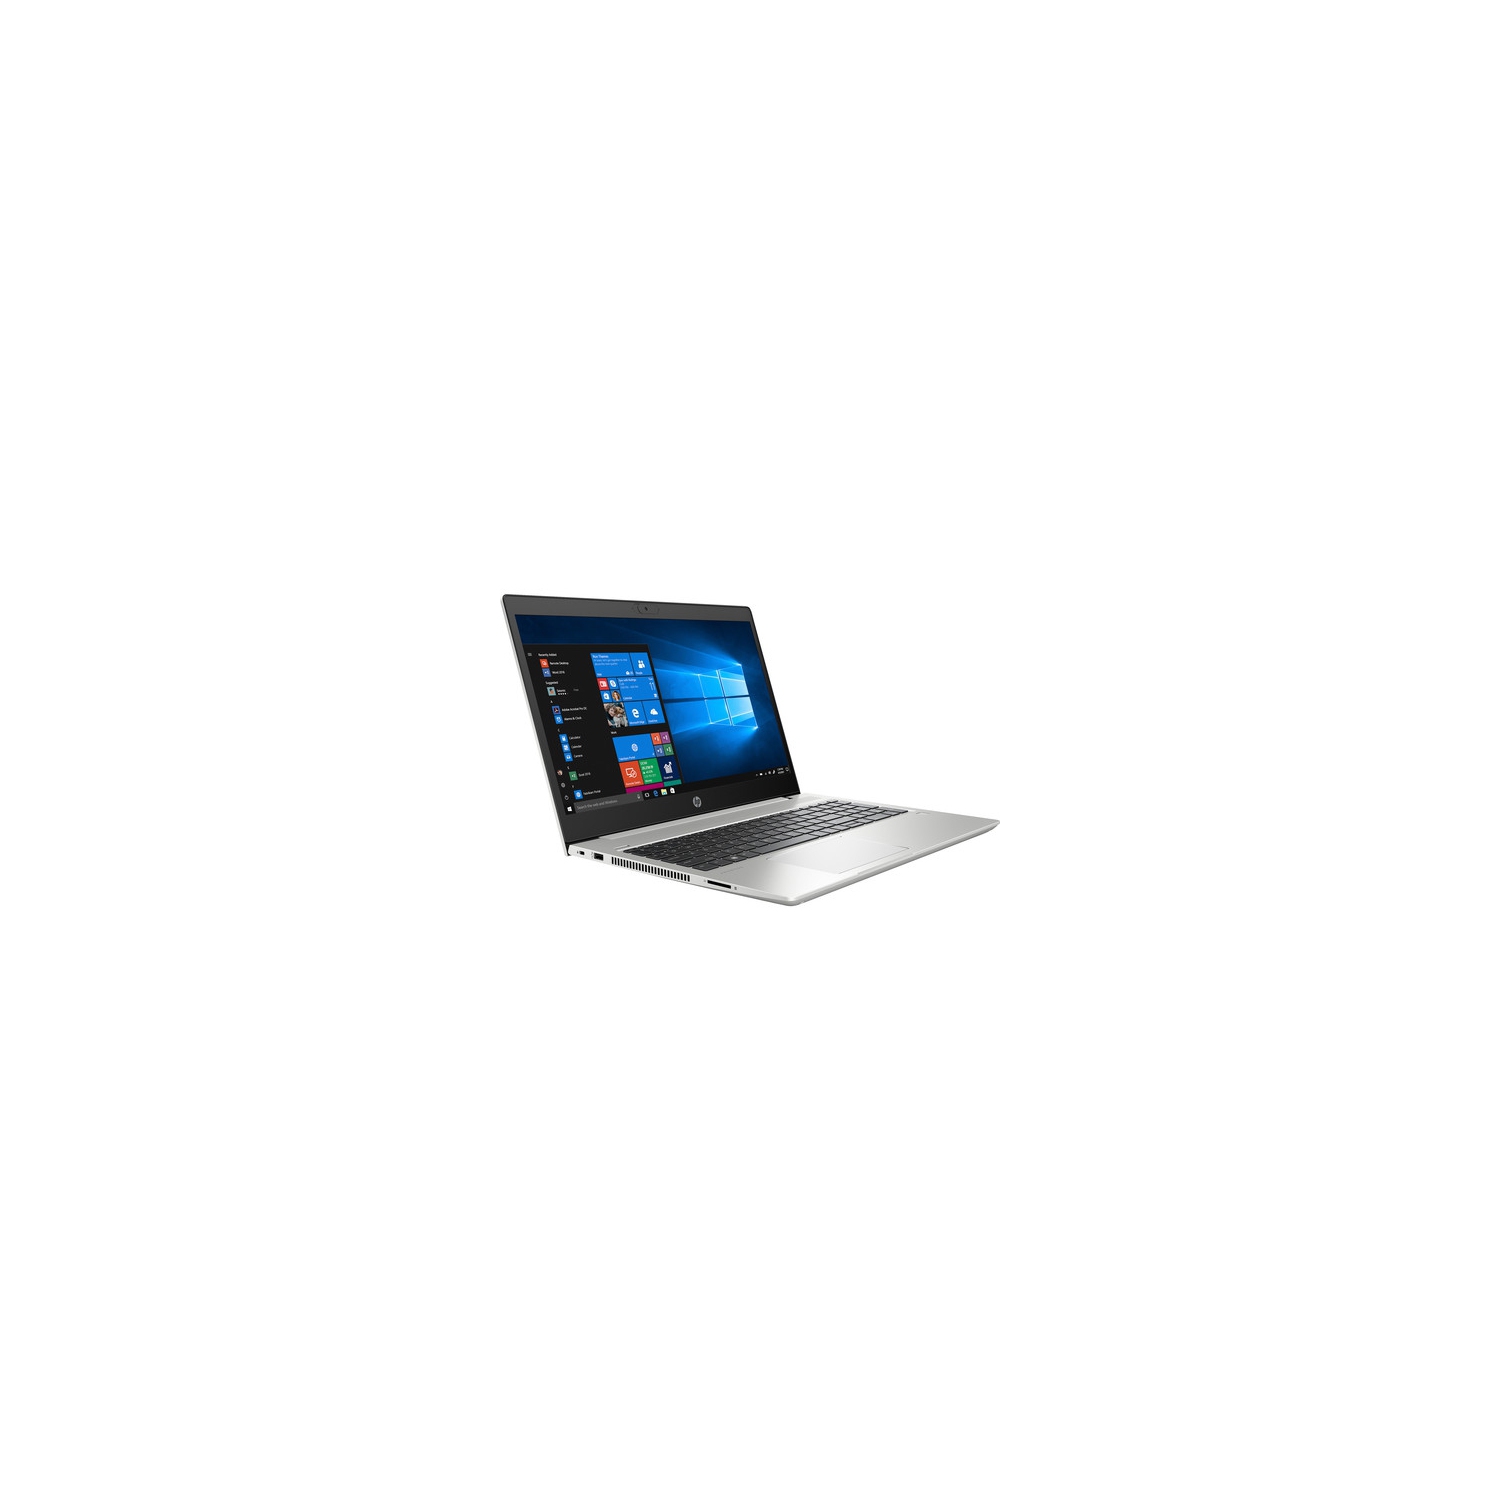 HP ProBook 450 G7 15.6" Notebook PC - Intel Core i5-10210U / 4GB RAM / 500GB HDD / Windows 10 Pro - Open Box